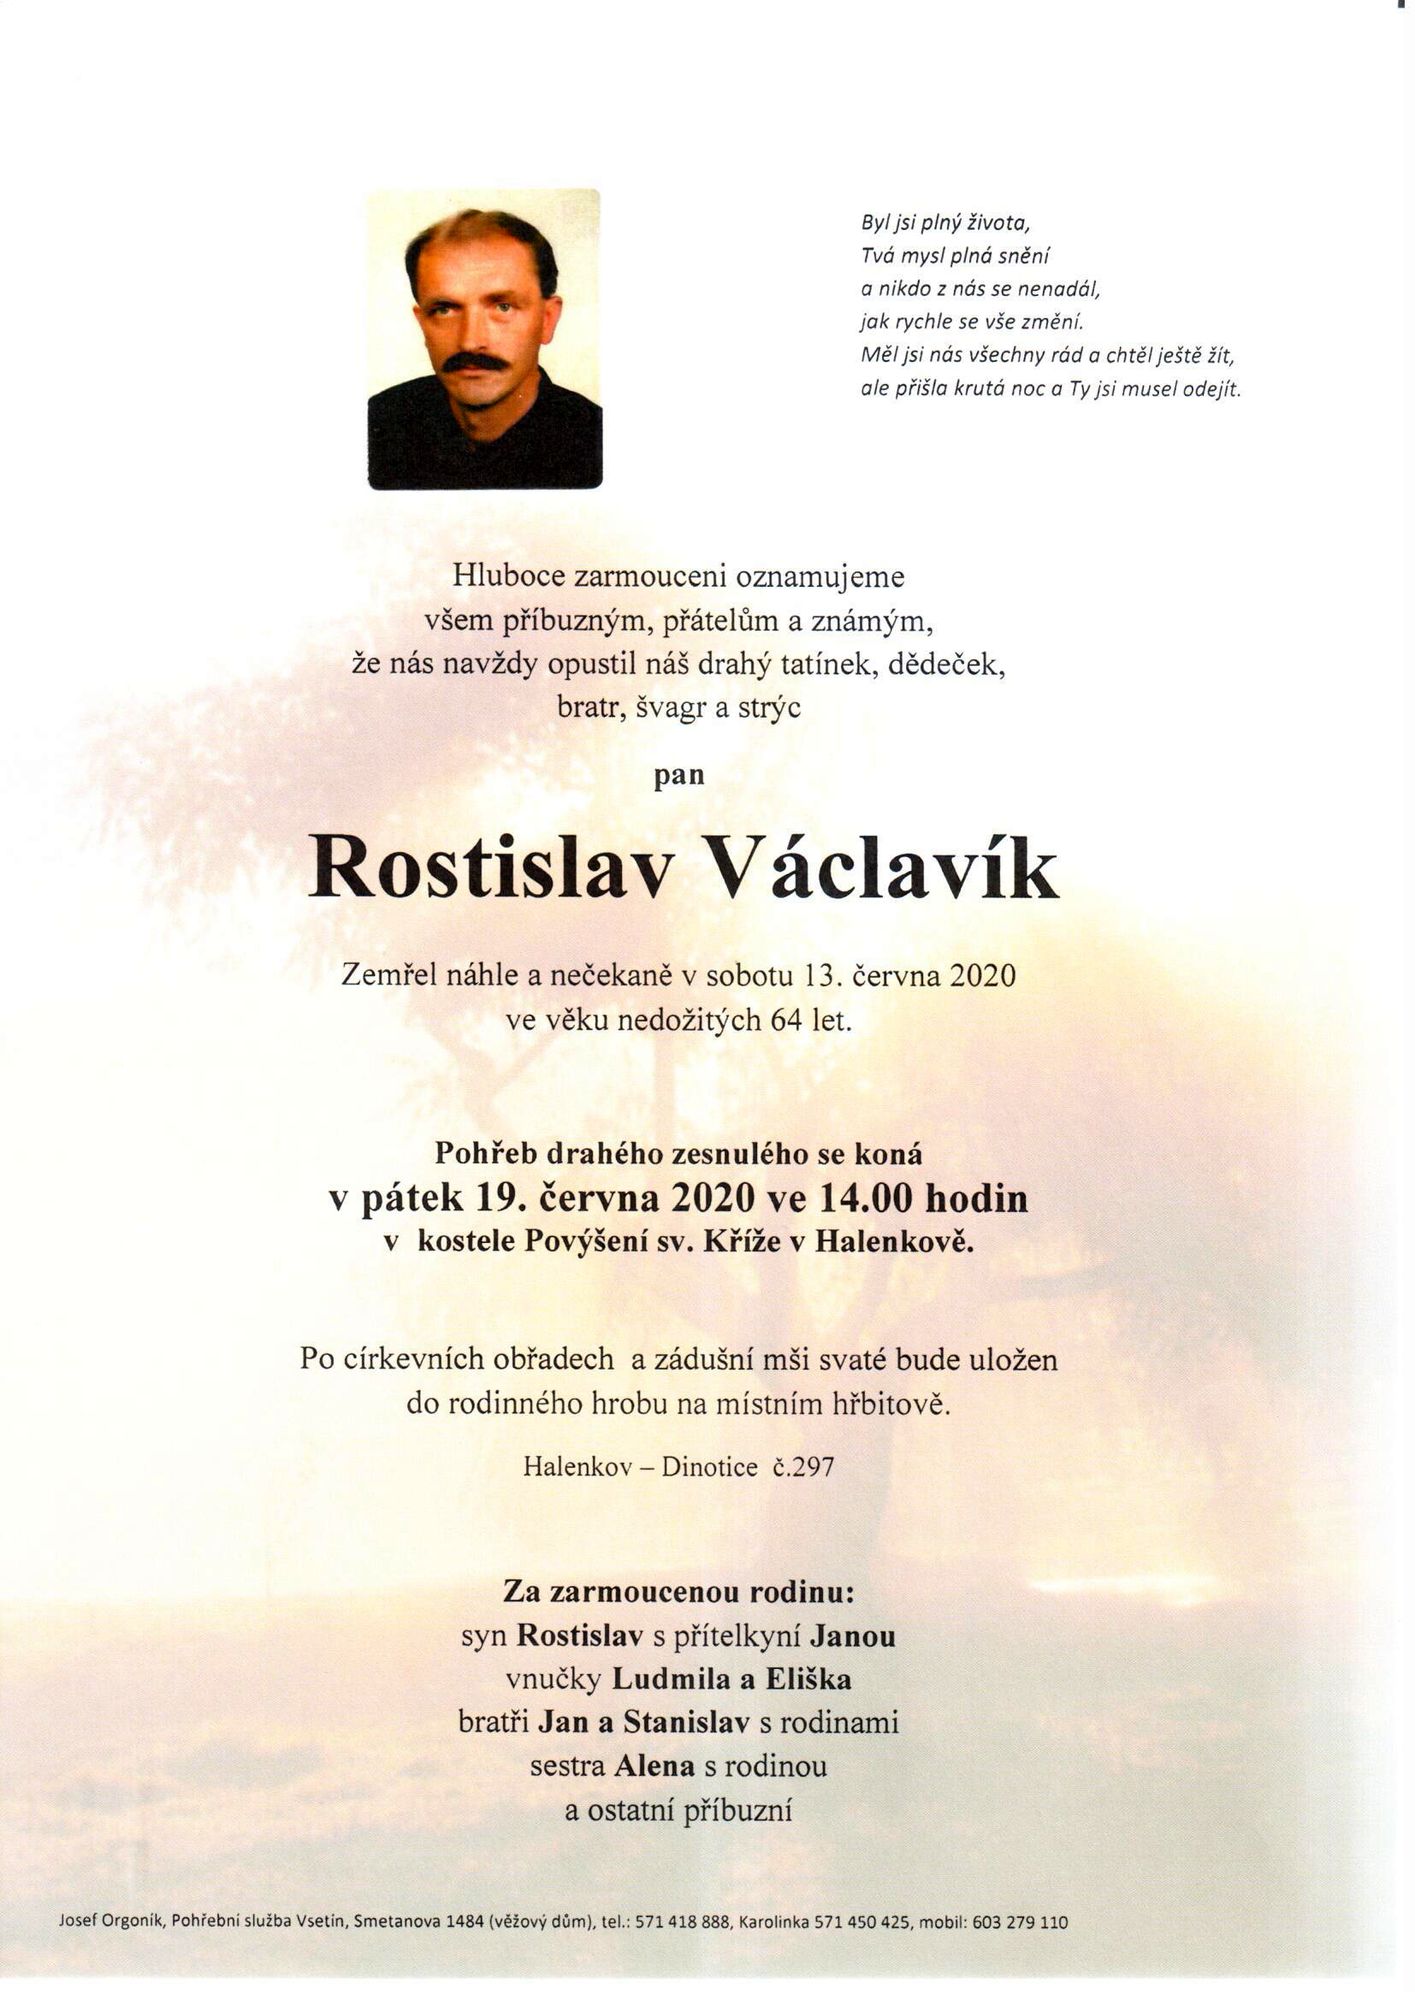 Rostislav Václavík